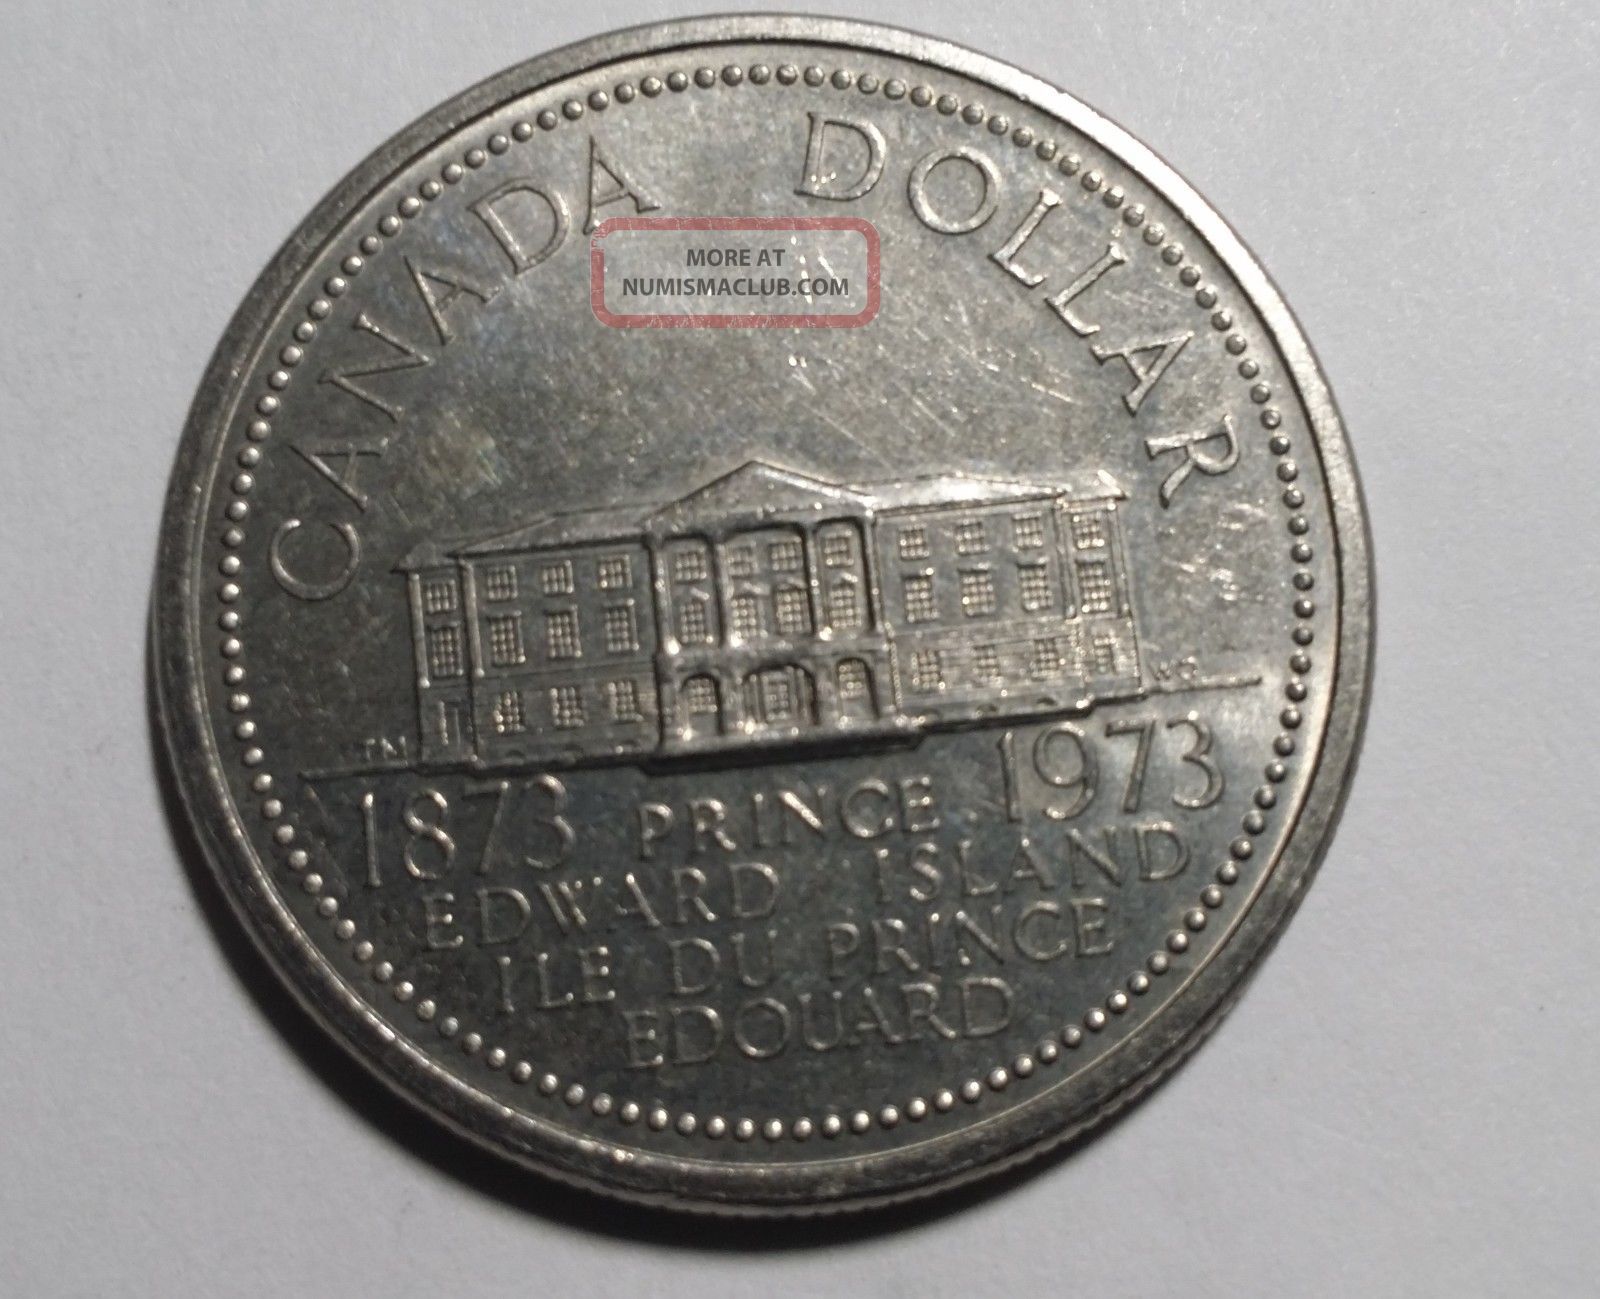 1873 - 1973 Commemorative One Dollar Canada Coin